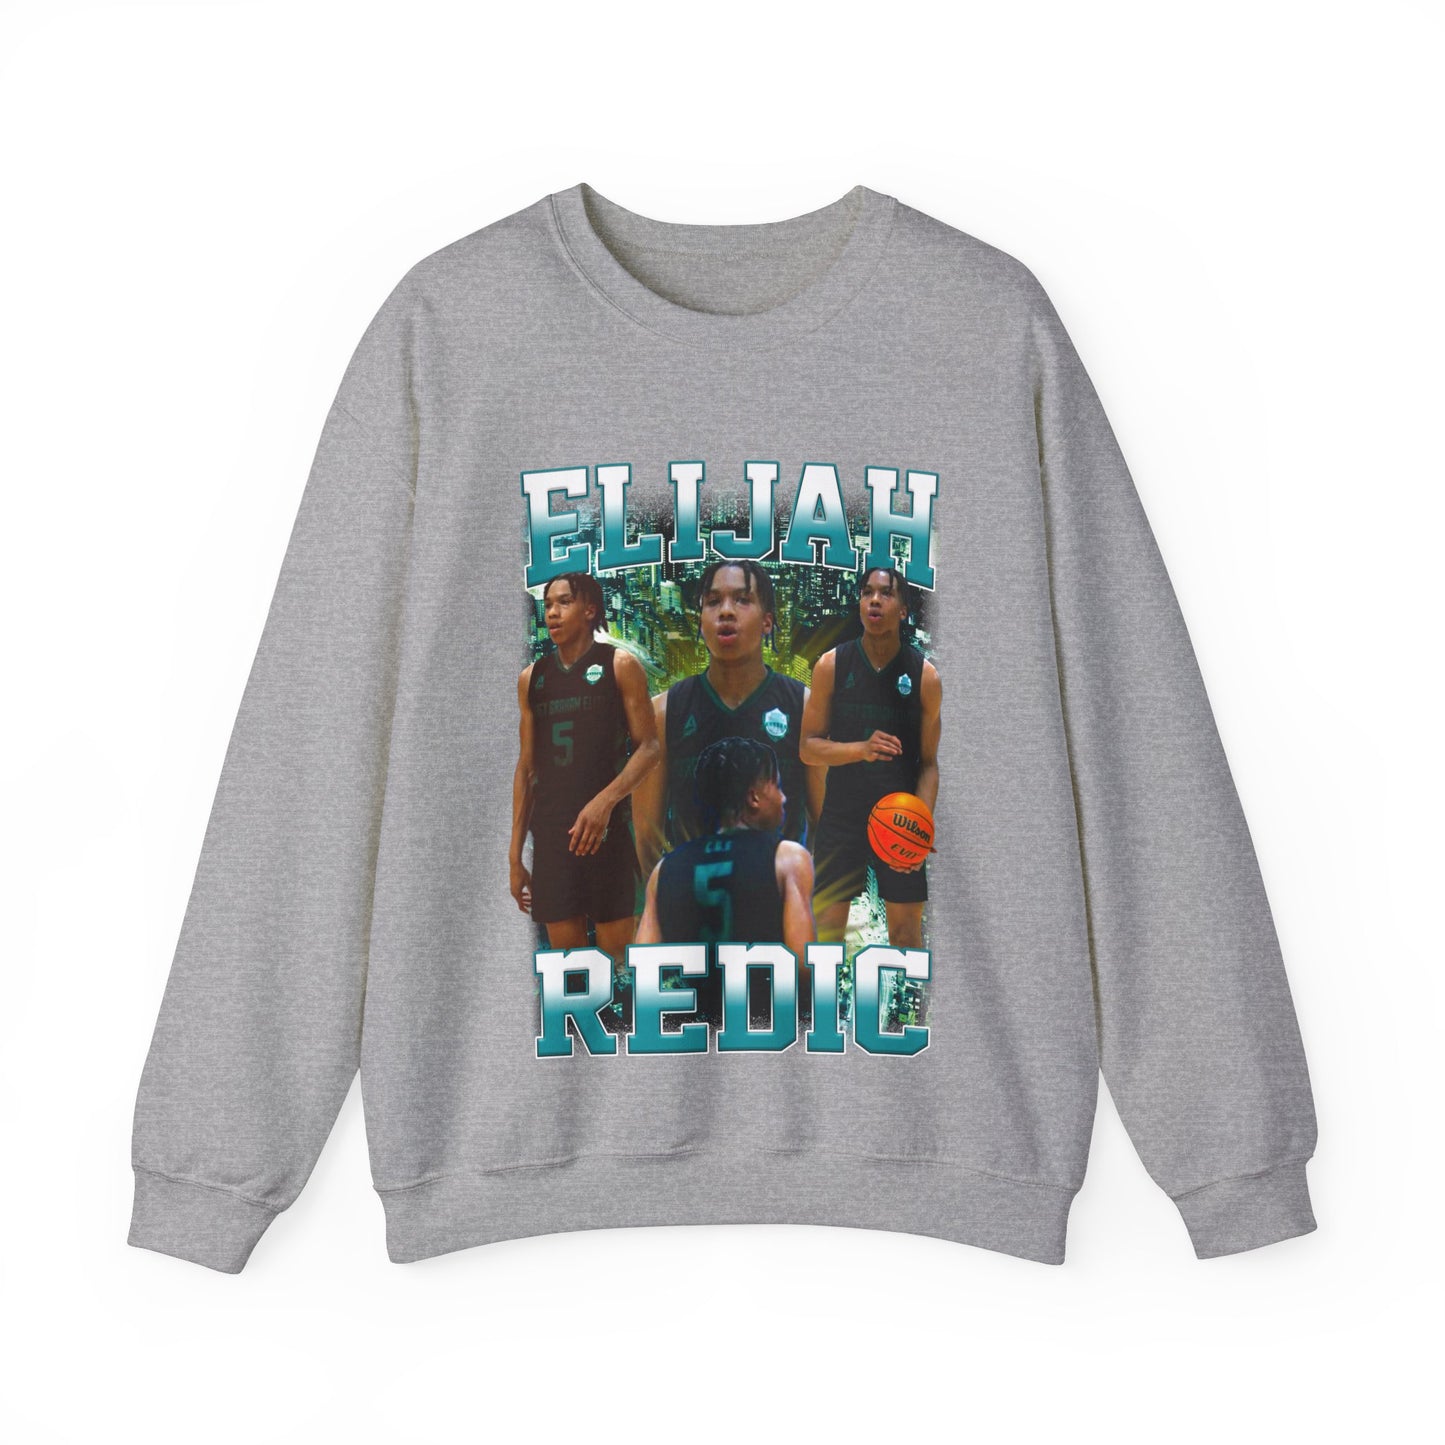 Elijah Redic Crewneck Sweatshirt